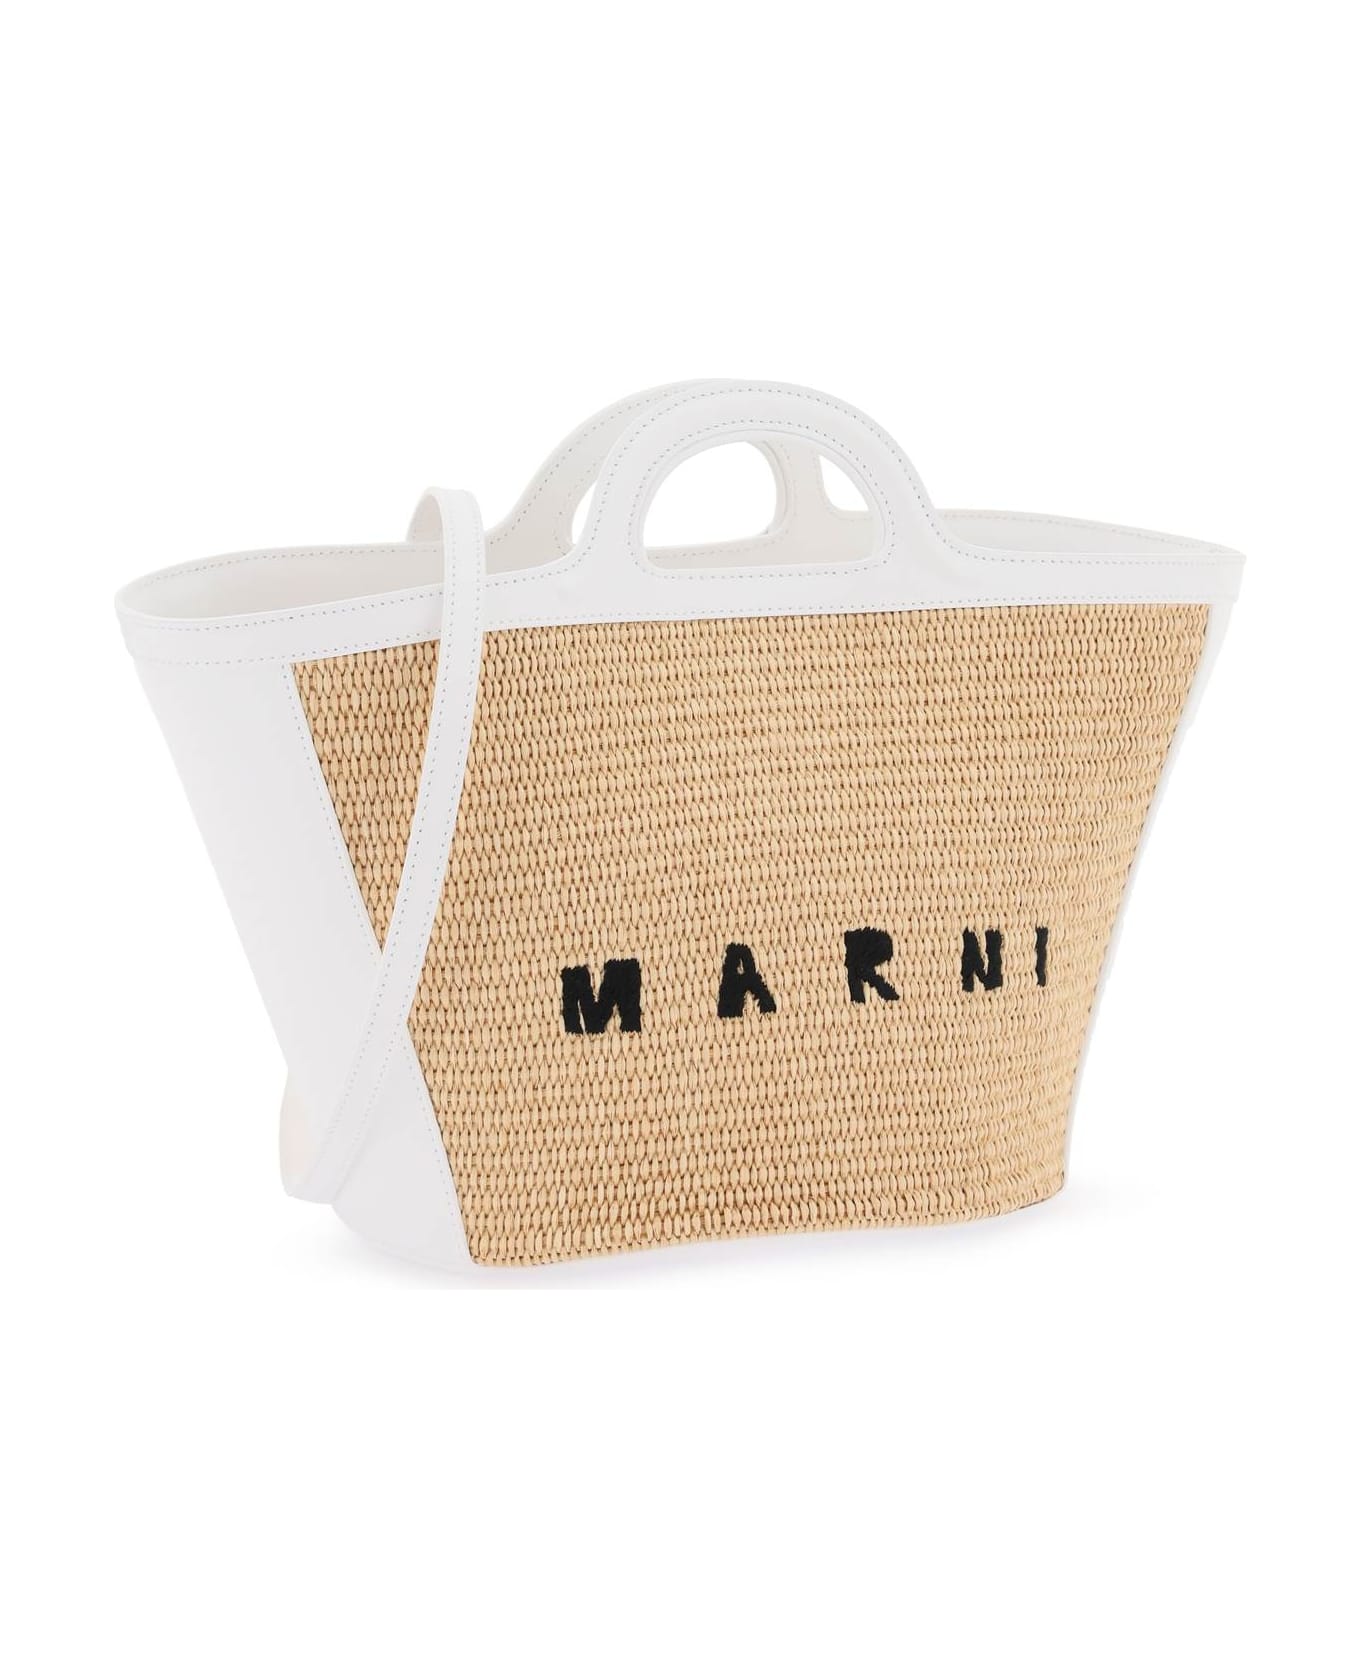 Marni Tropicalia Small Handbag - SAND STORM LILY WHITE (Beige) トートバッグ